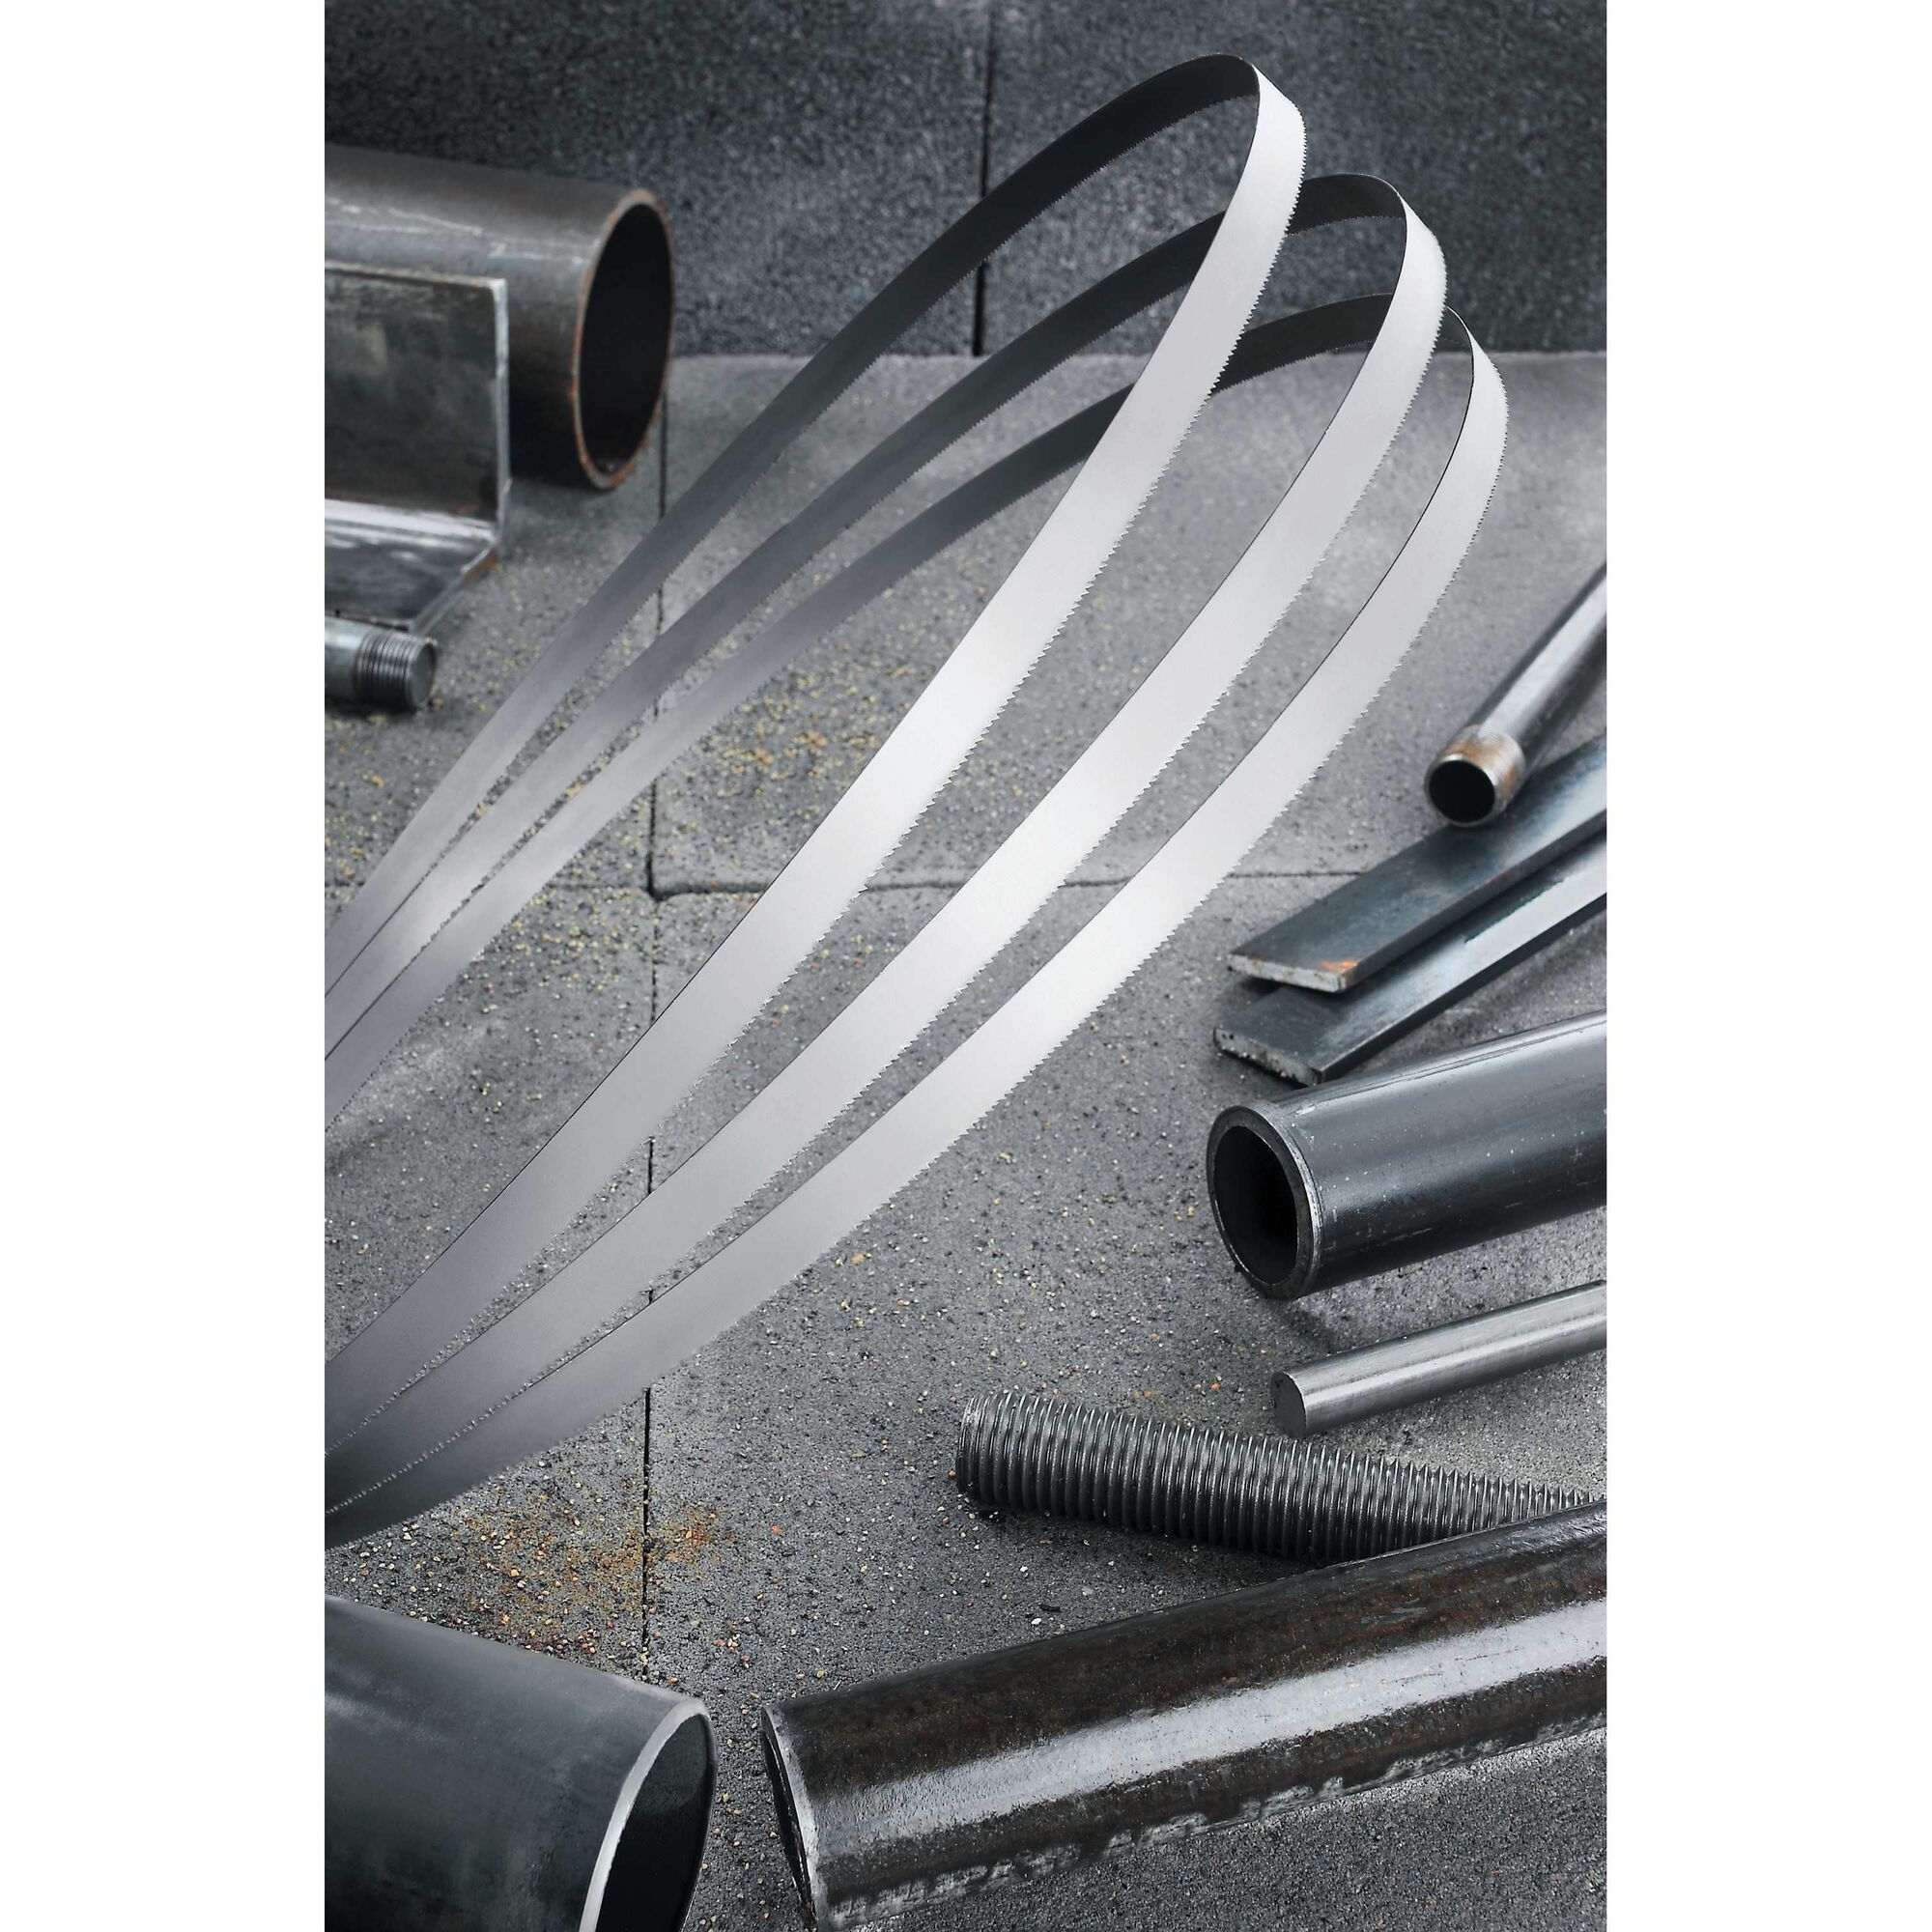 - 10TPI Replacement for DeWalt DW3981 Carbon Steel Bandsaw Blades 44-78 12mm 1140mm x 1/2 